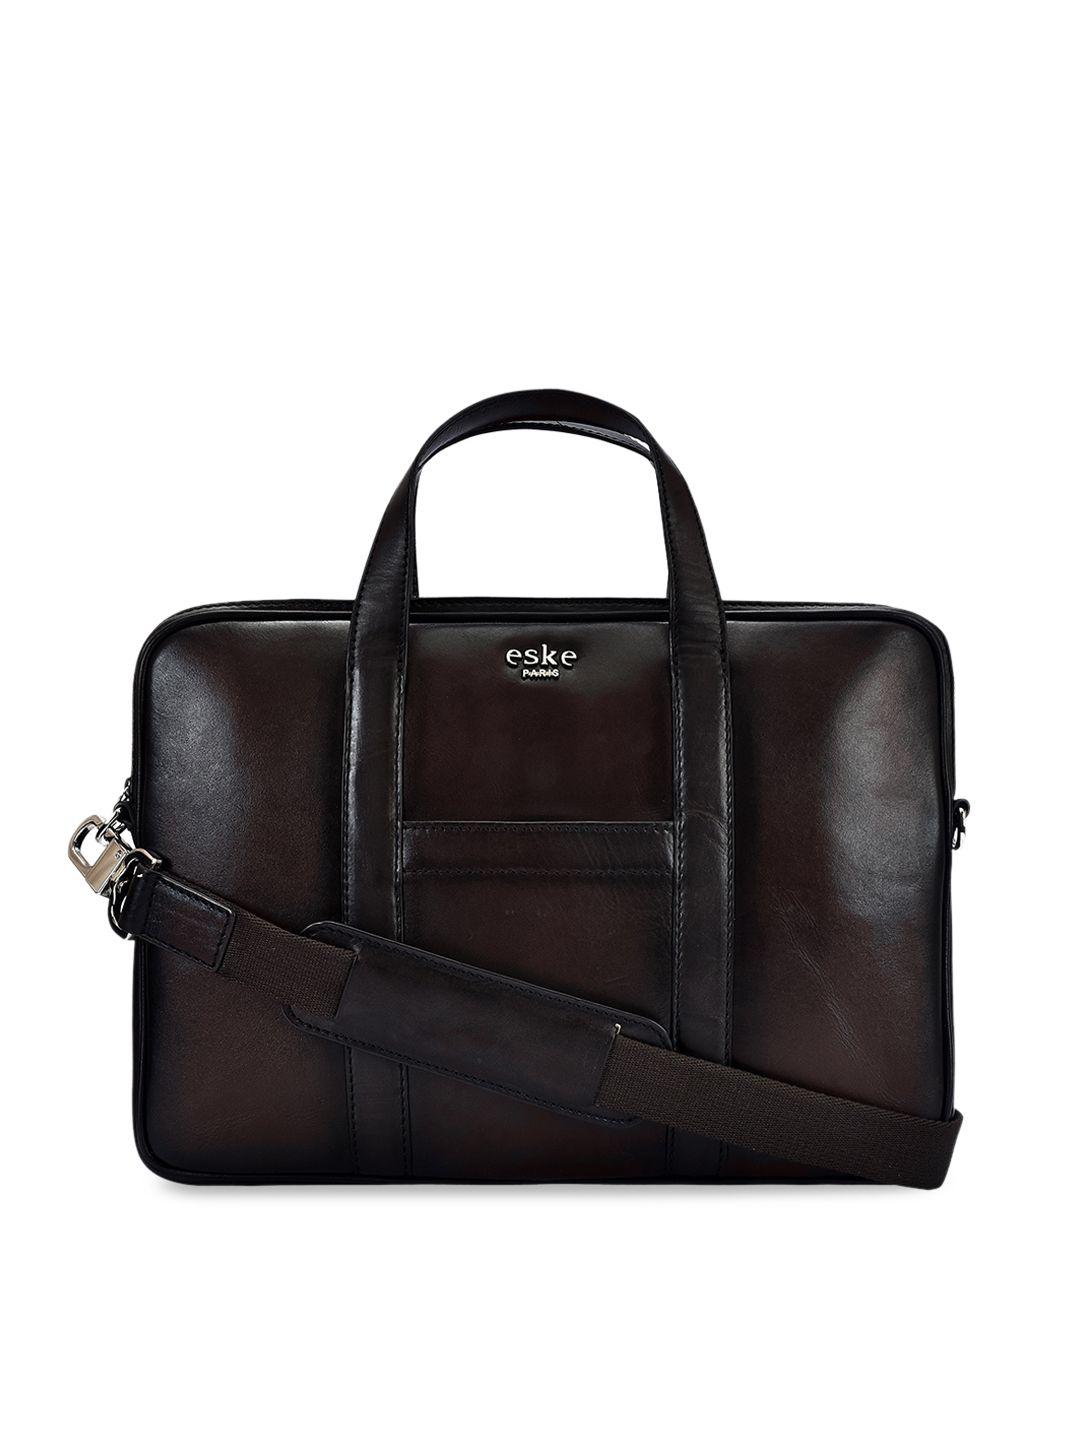 eske men maroon & black colourblocked leather laptop bag